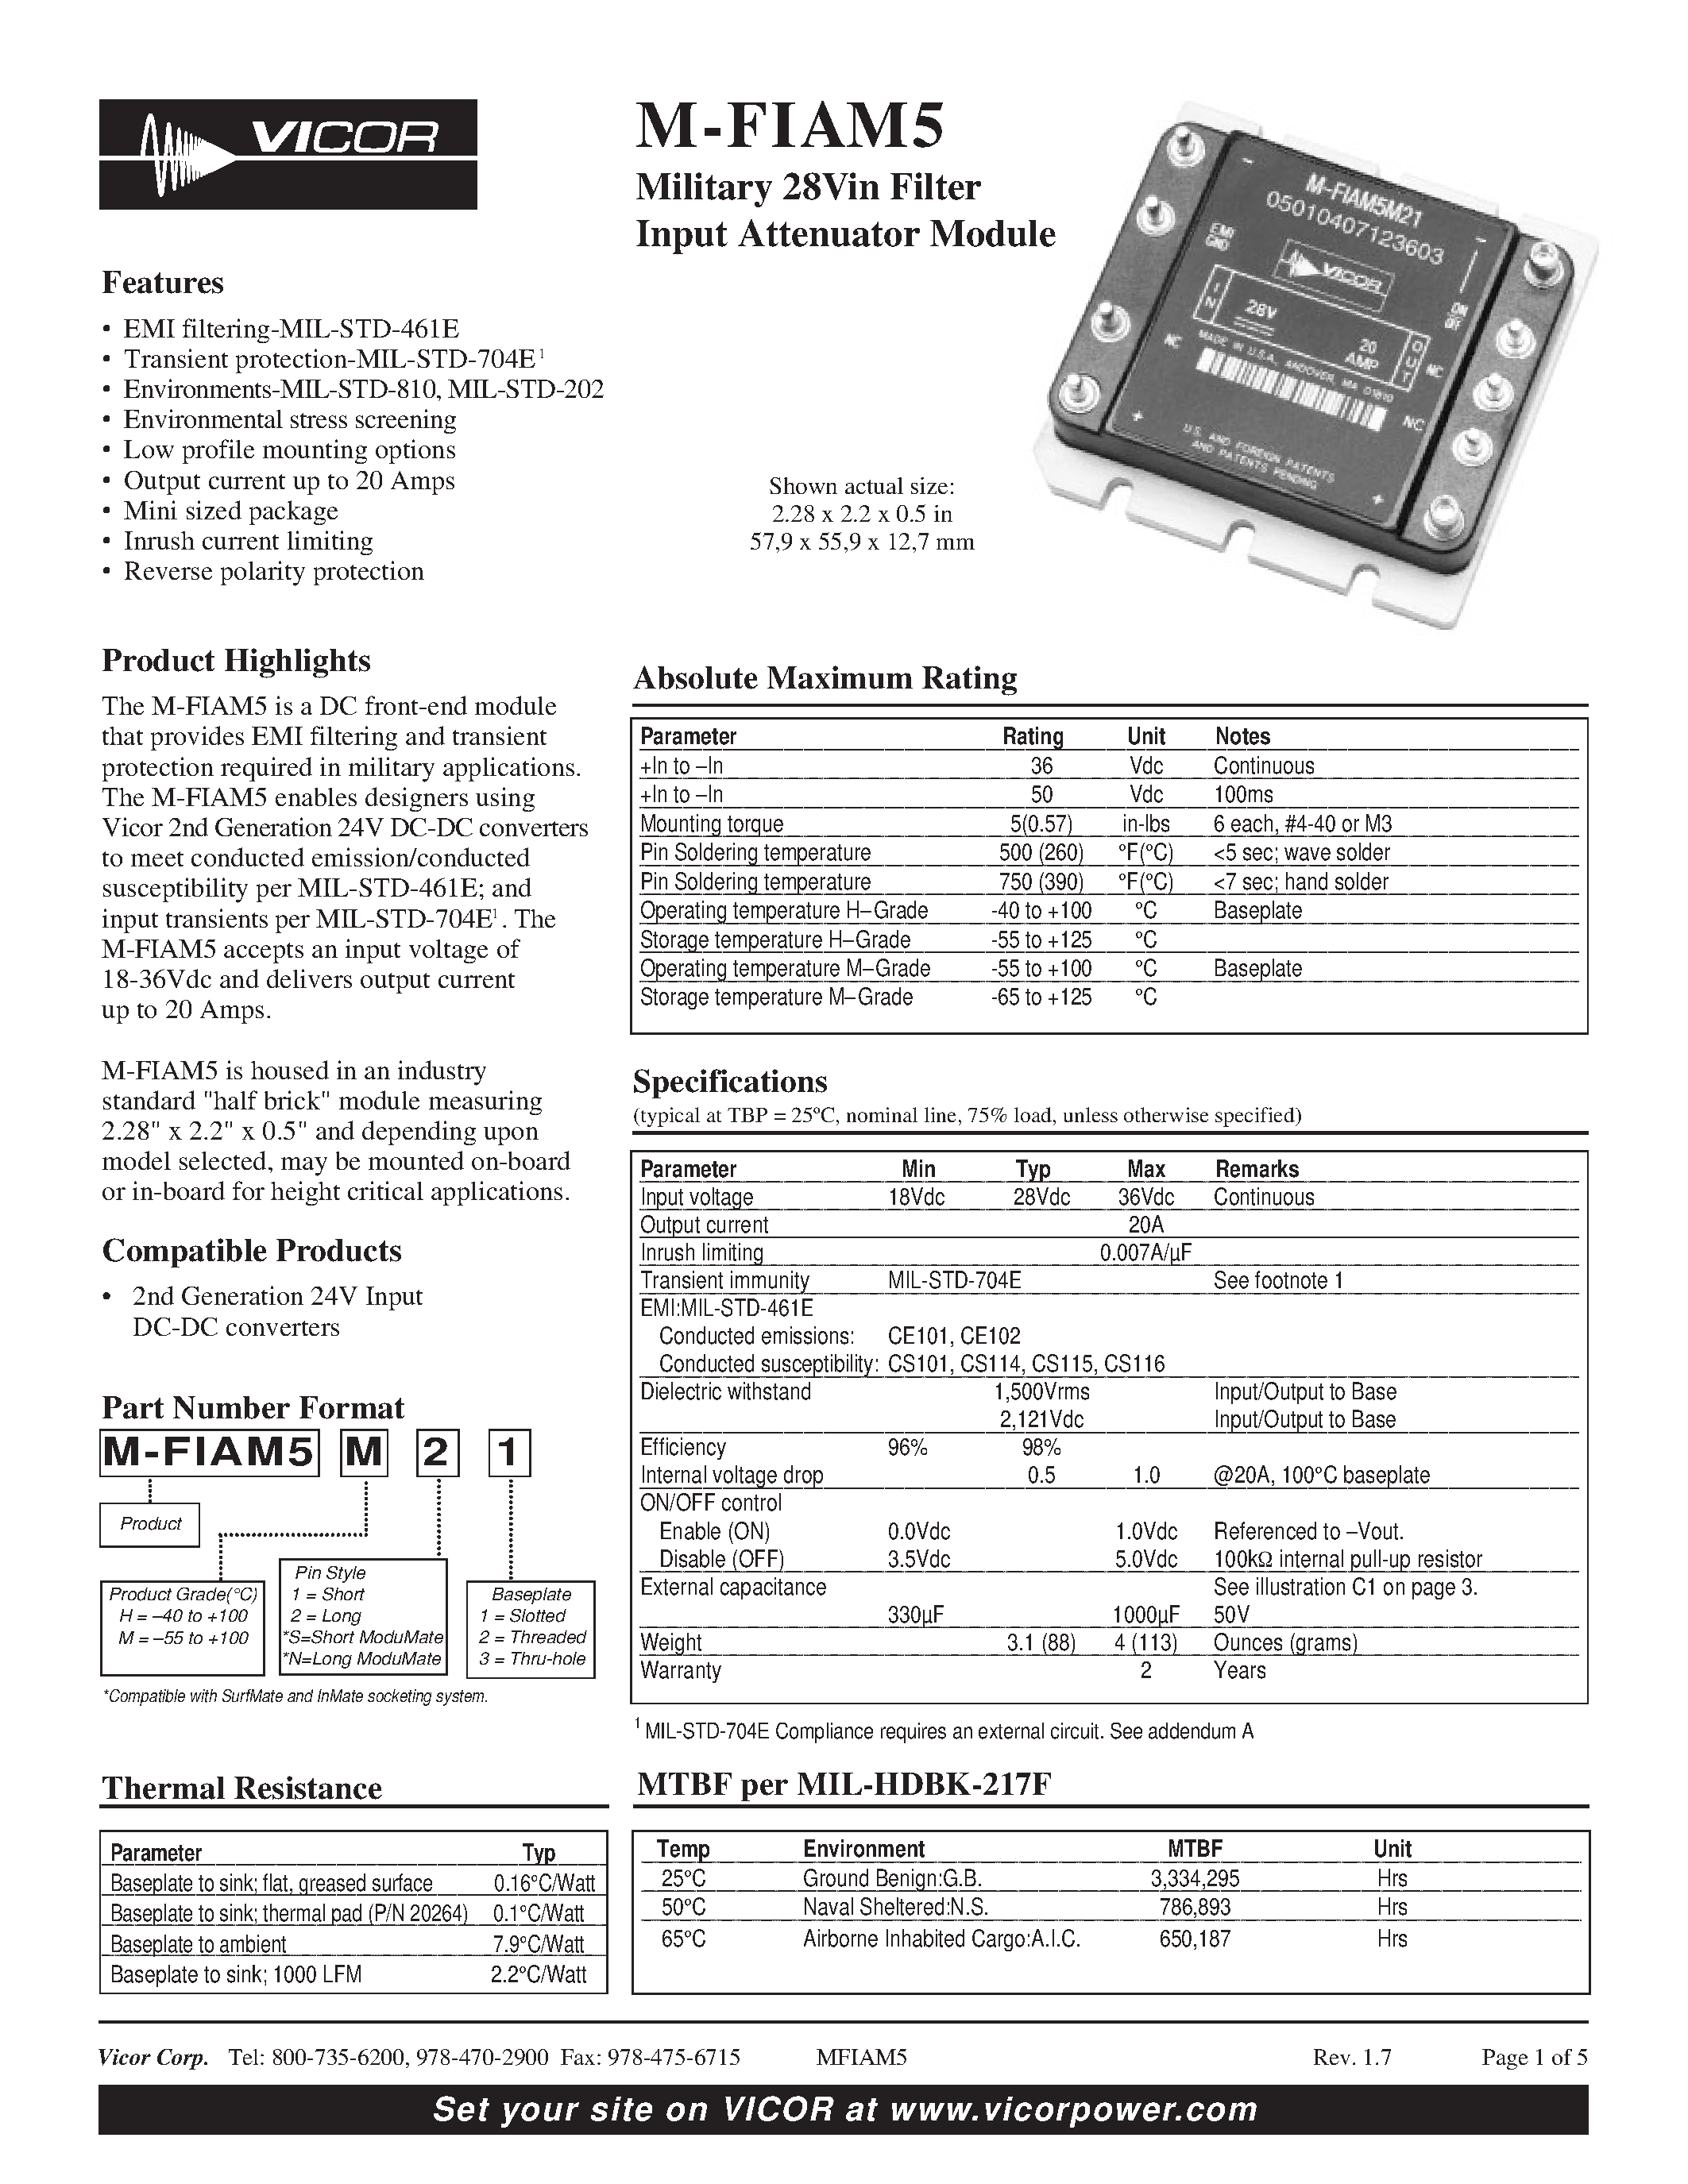 Datasheet M-FIAM5M11 - Military 28Vin Filter Input Attenuator Module page 1